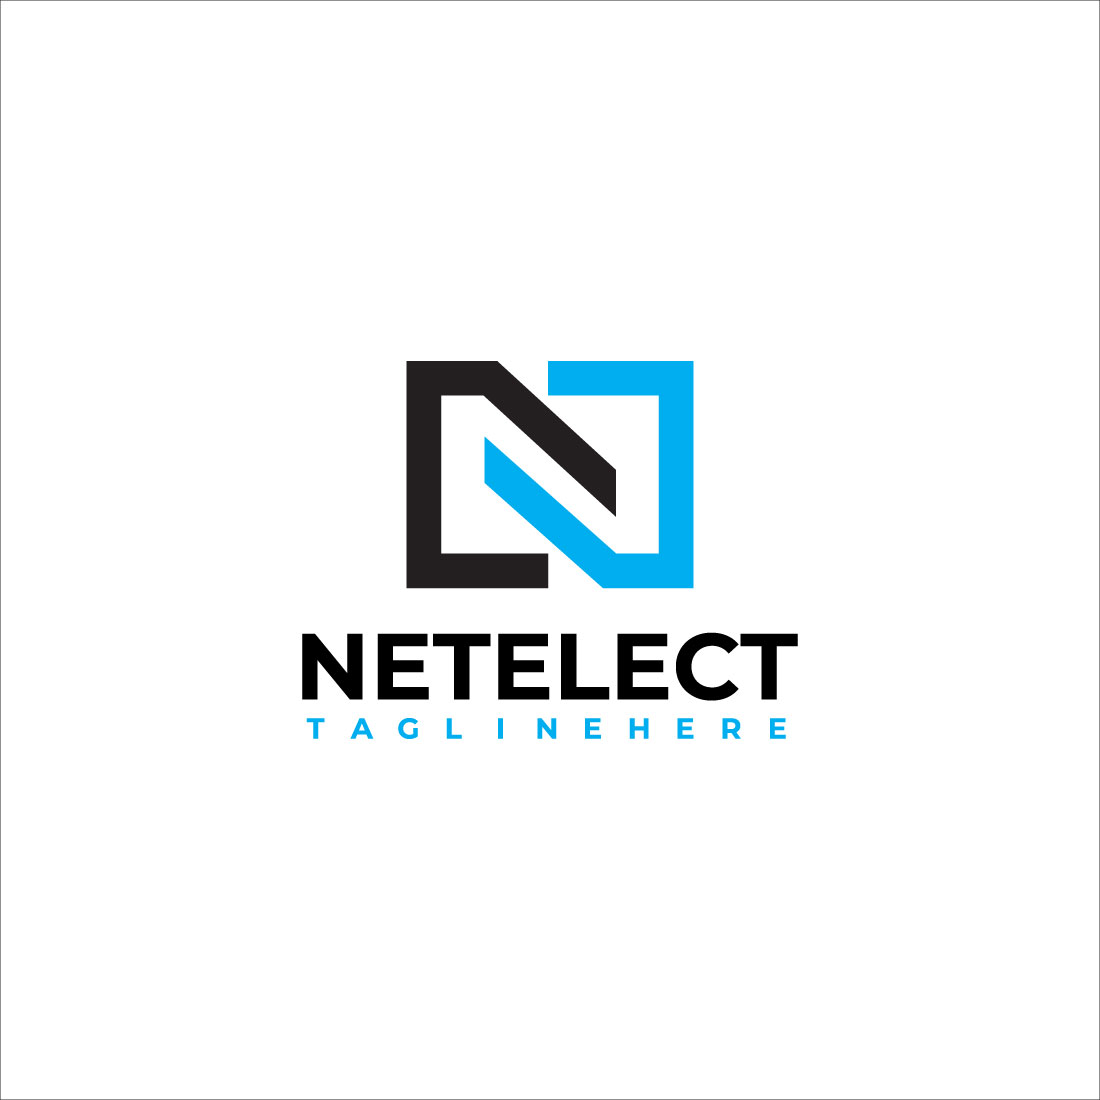 Netelect N letter Logo Design Template main cover.